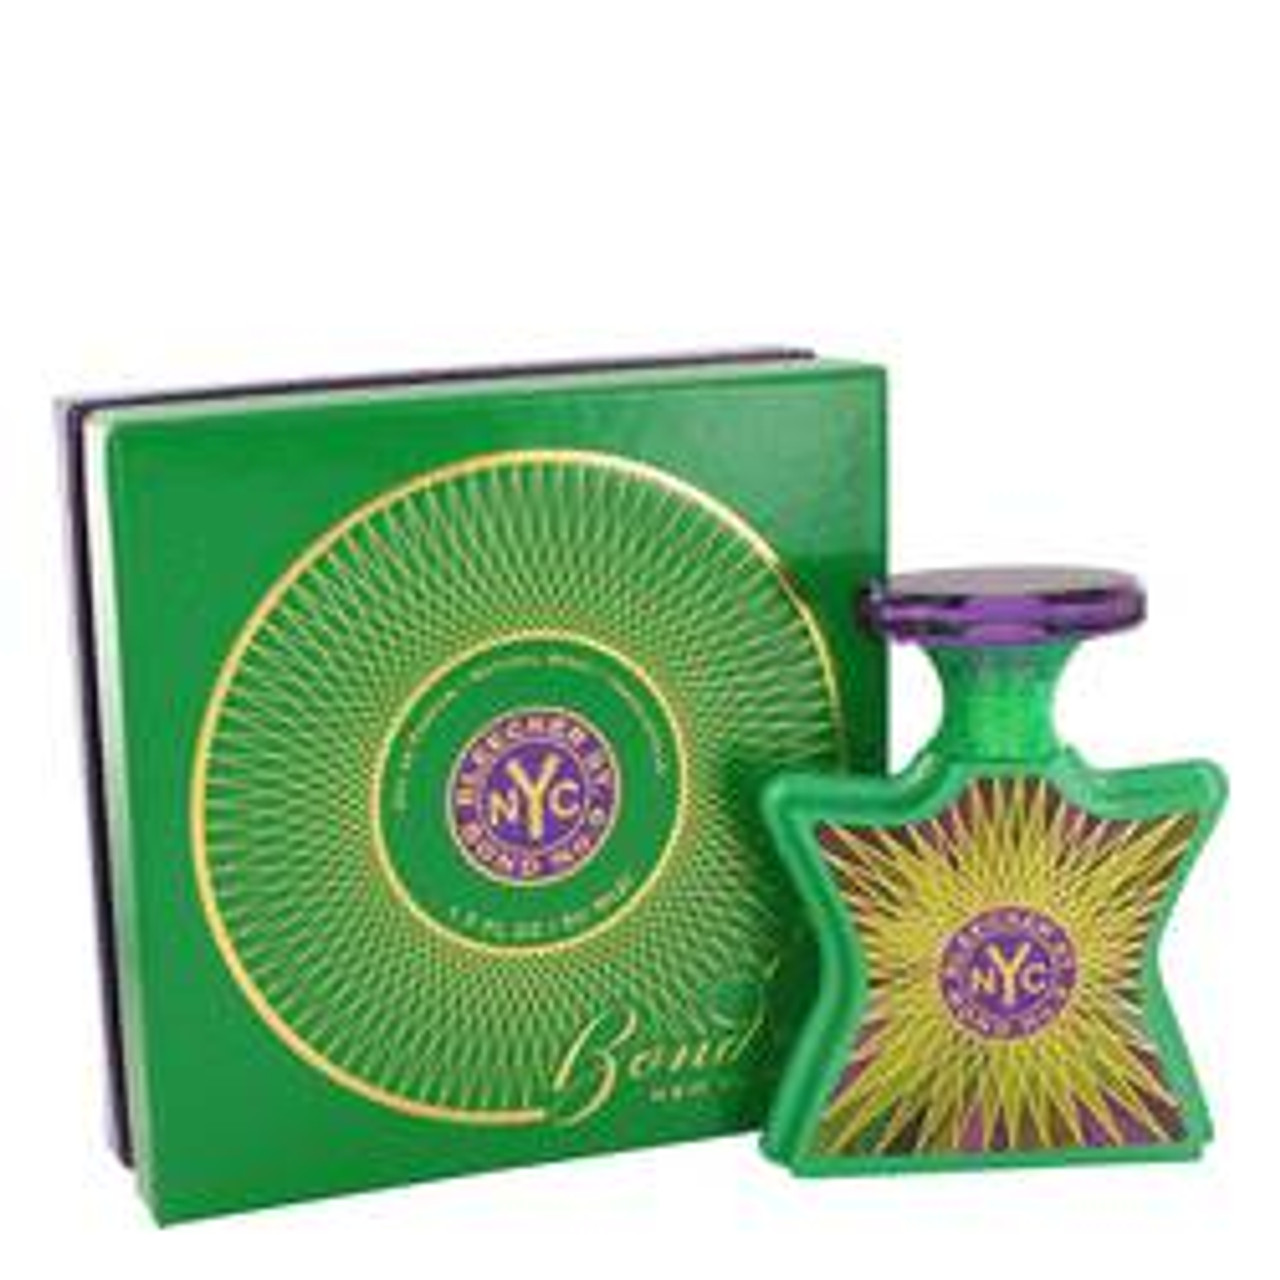 Bleecker Street Perfume By Bond No. 9 Eau De Parfum Spray (Unisex) 1.7 oz for Women - *Pre-Order